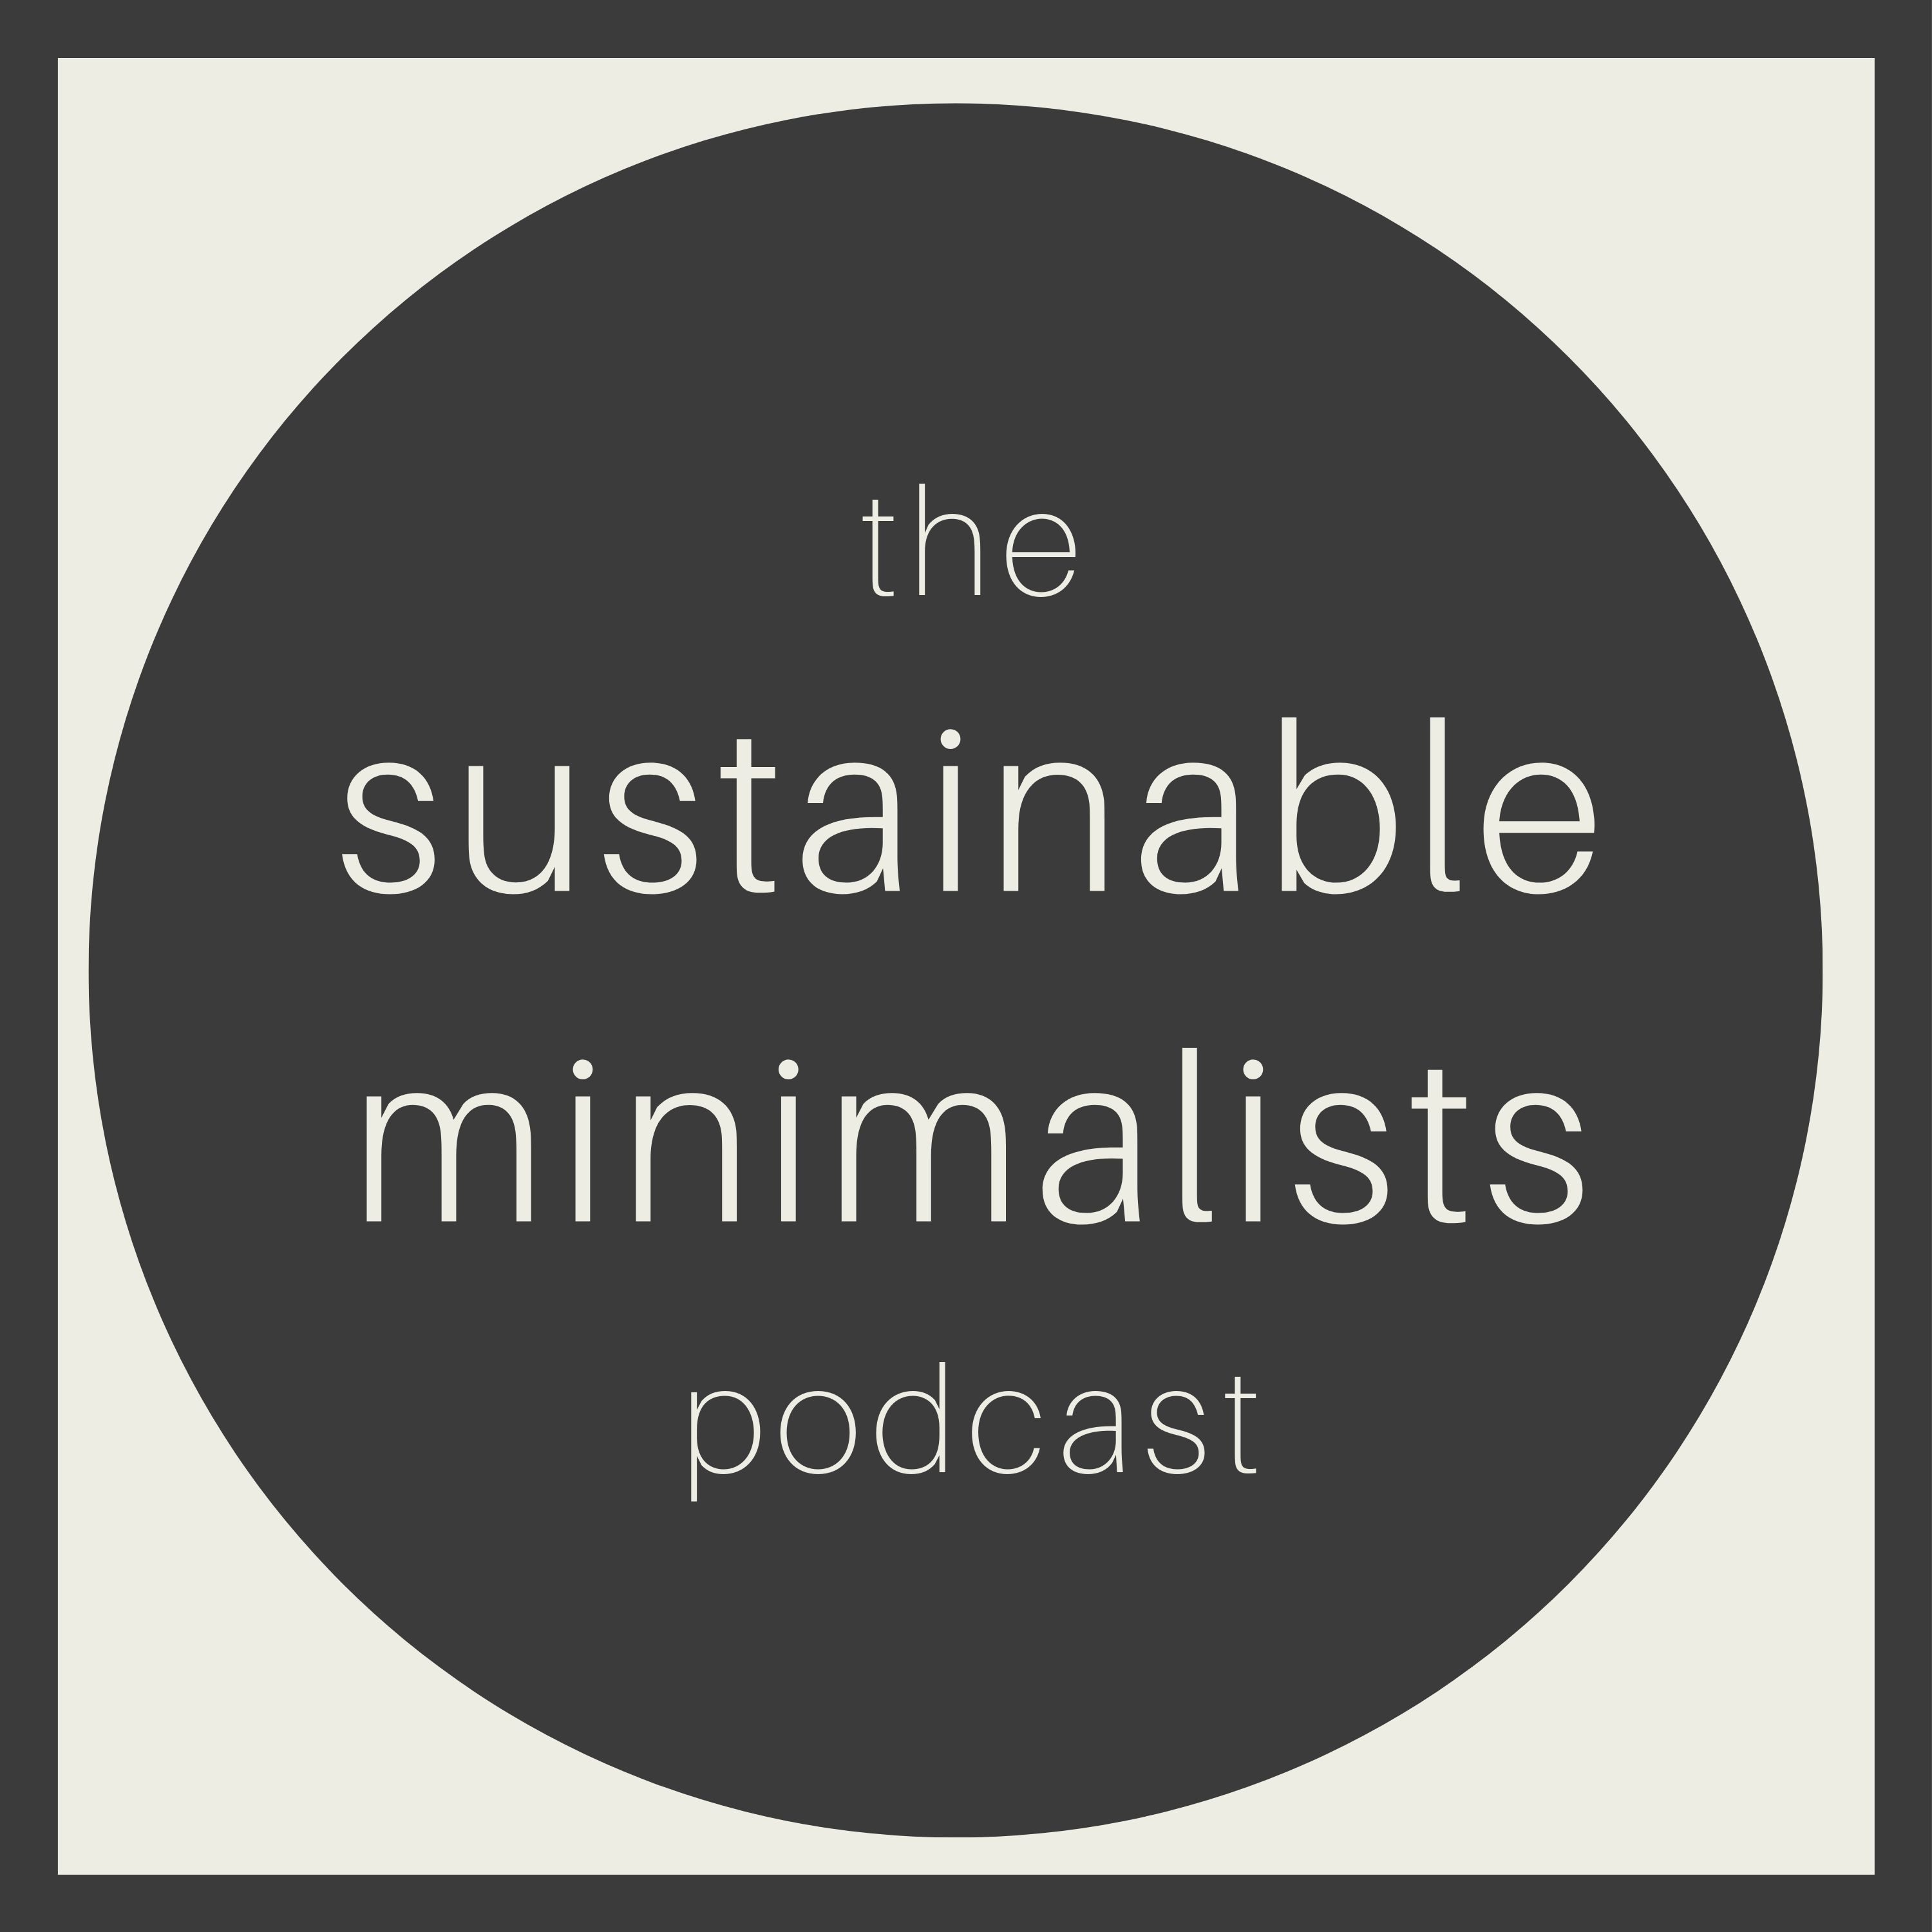 The Sustainable Minimalists podcast